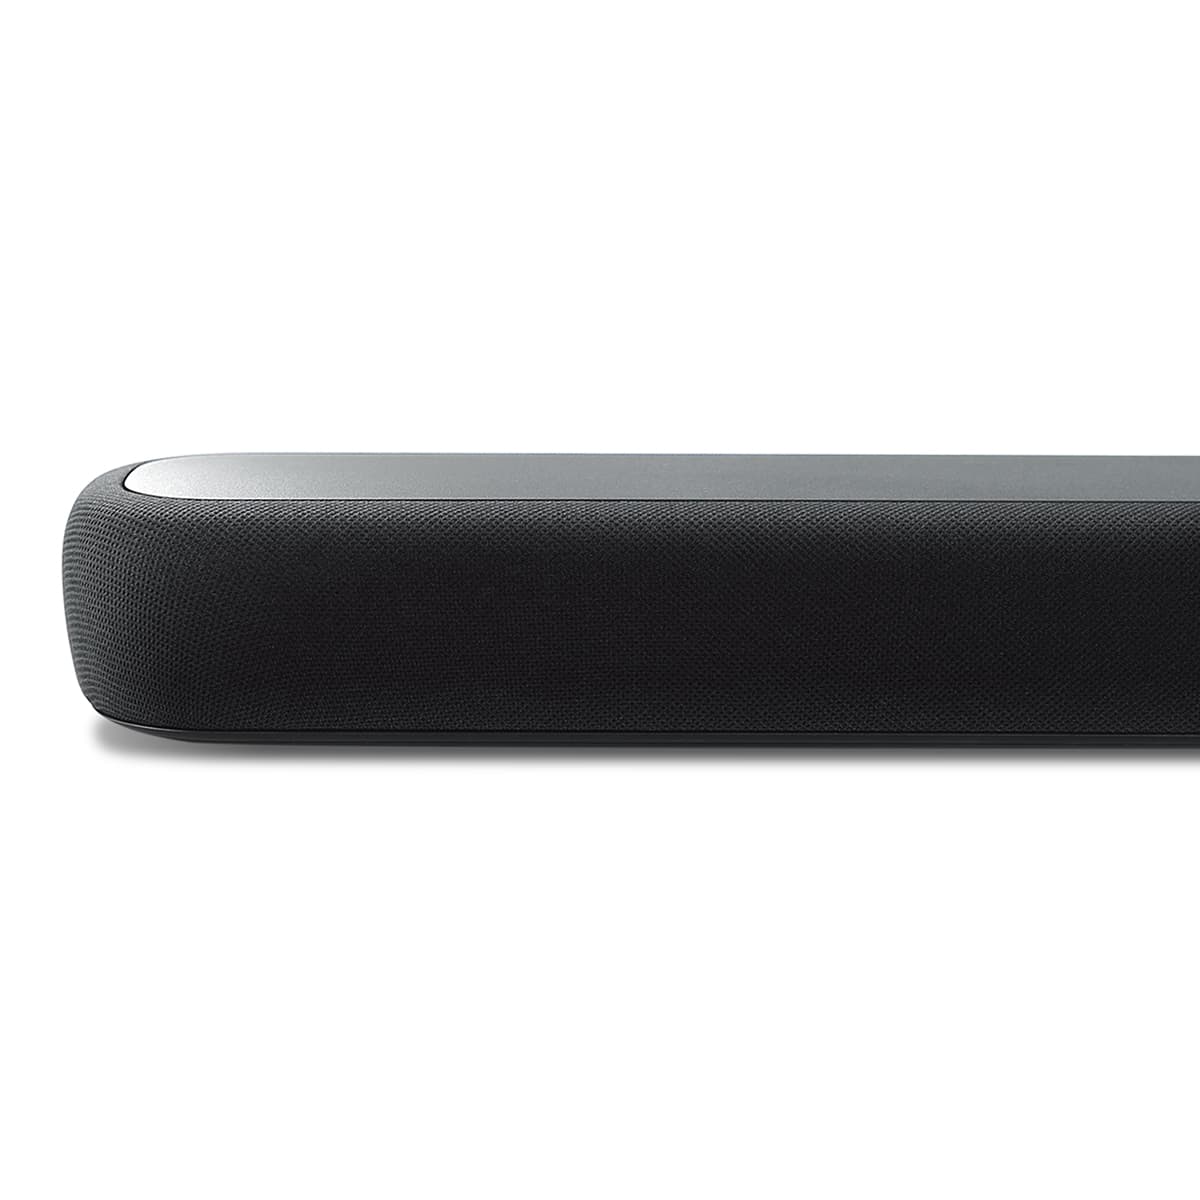 Yamaha YAS-209 Sound Bar with Wireless Subwoofer, Bluetooth - image 4 of 10